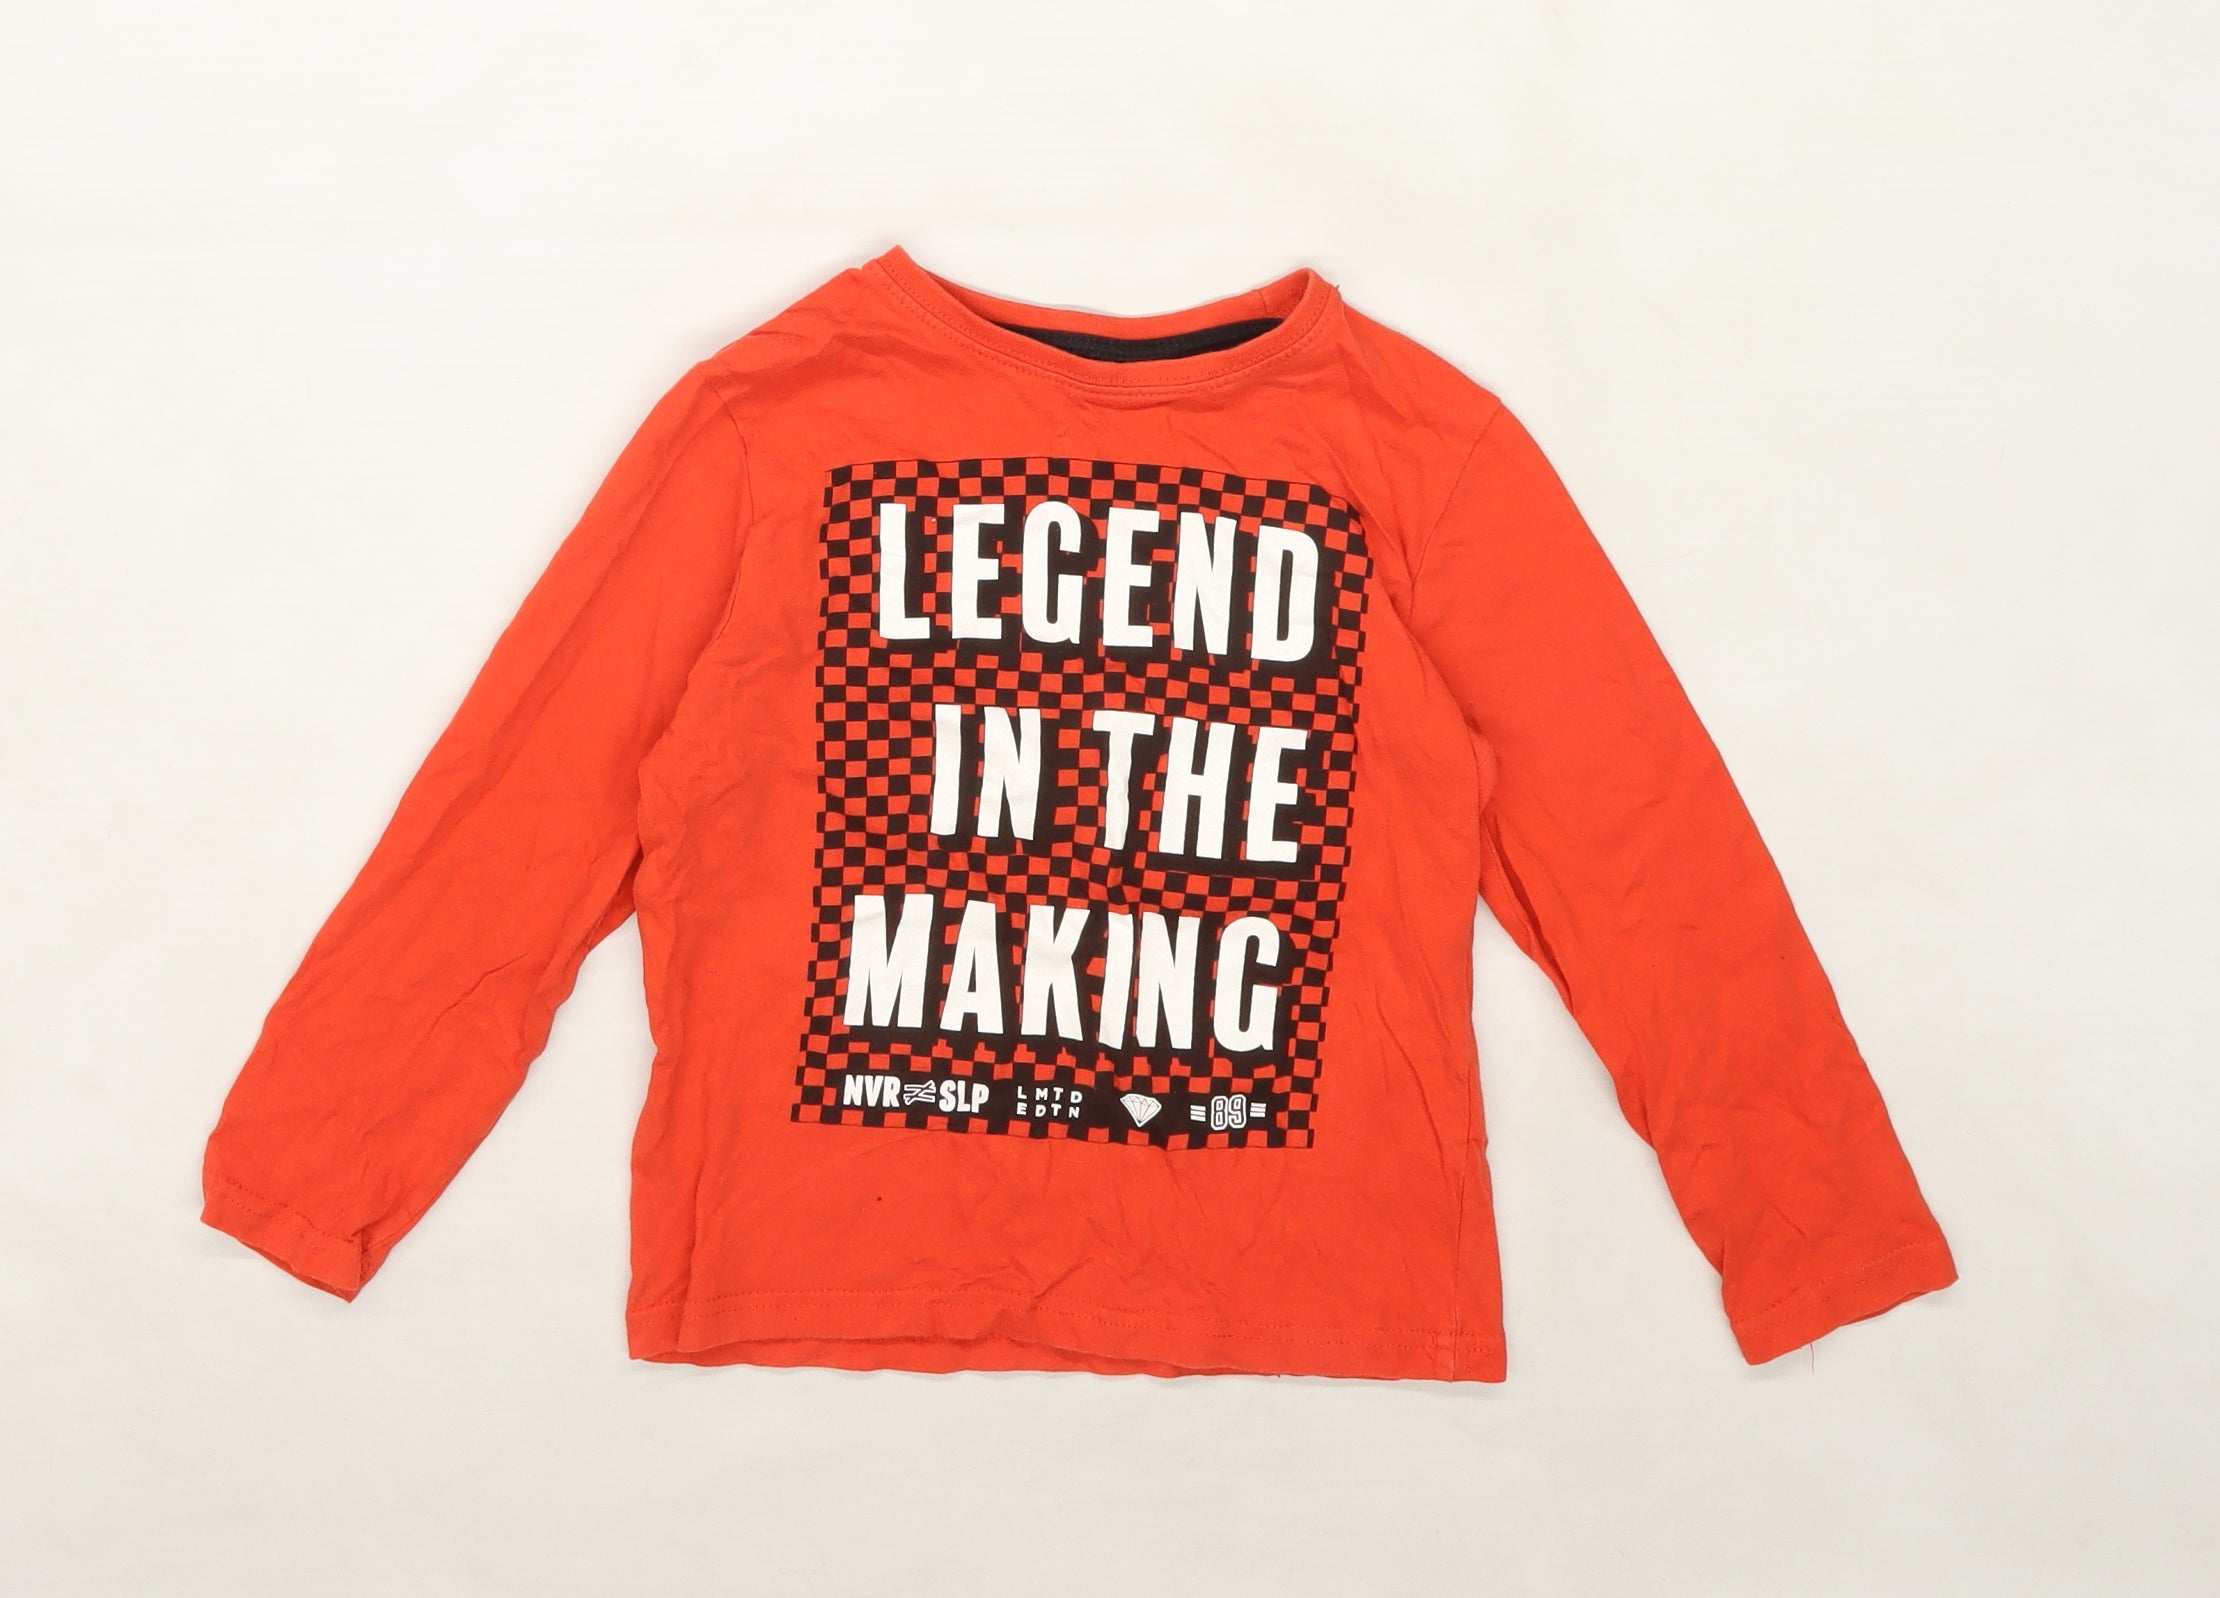 Primark Boys Red Basic T-Shirt Size 5-6 Years - Legend in the making Rewards Monetha